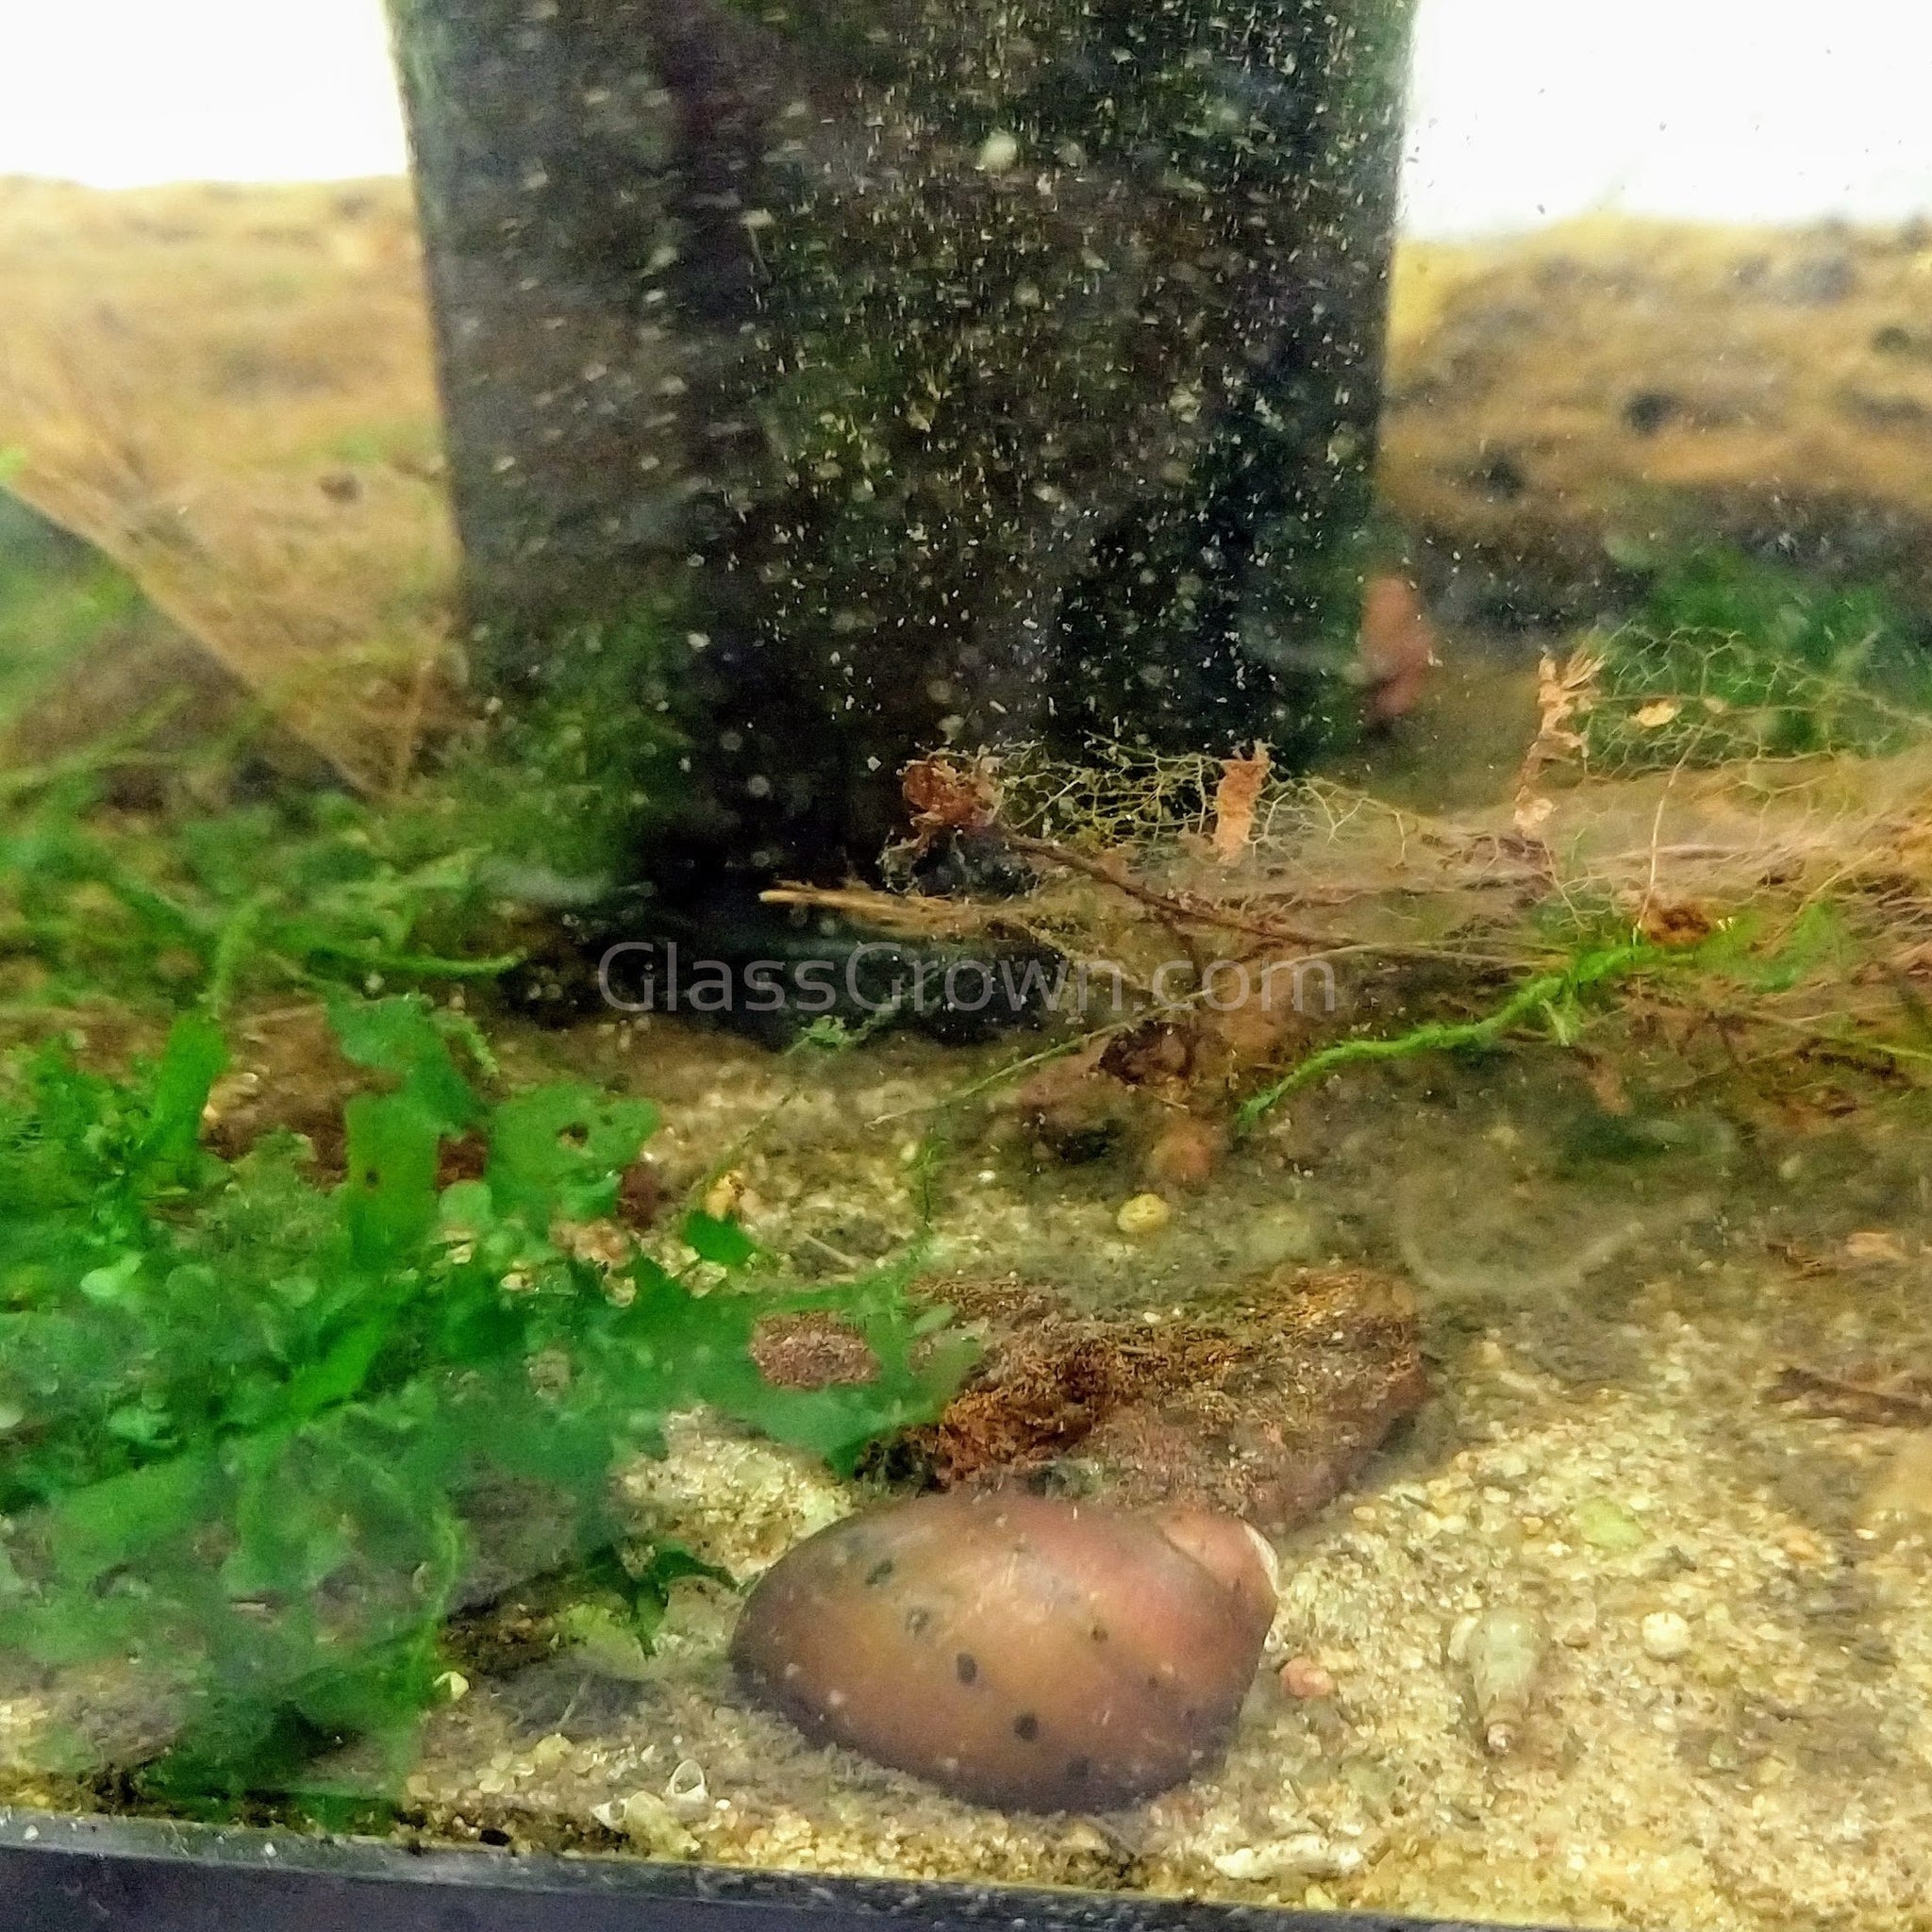 Red Spotted Nerite Snail - Riverpark Aquatics